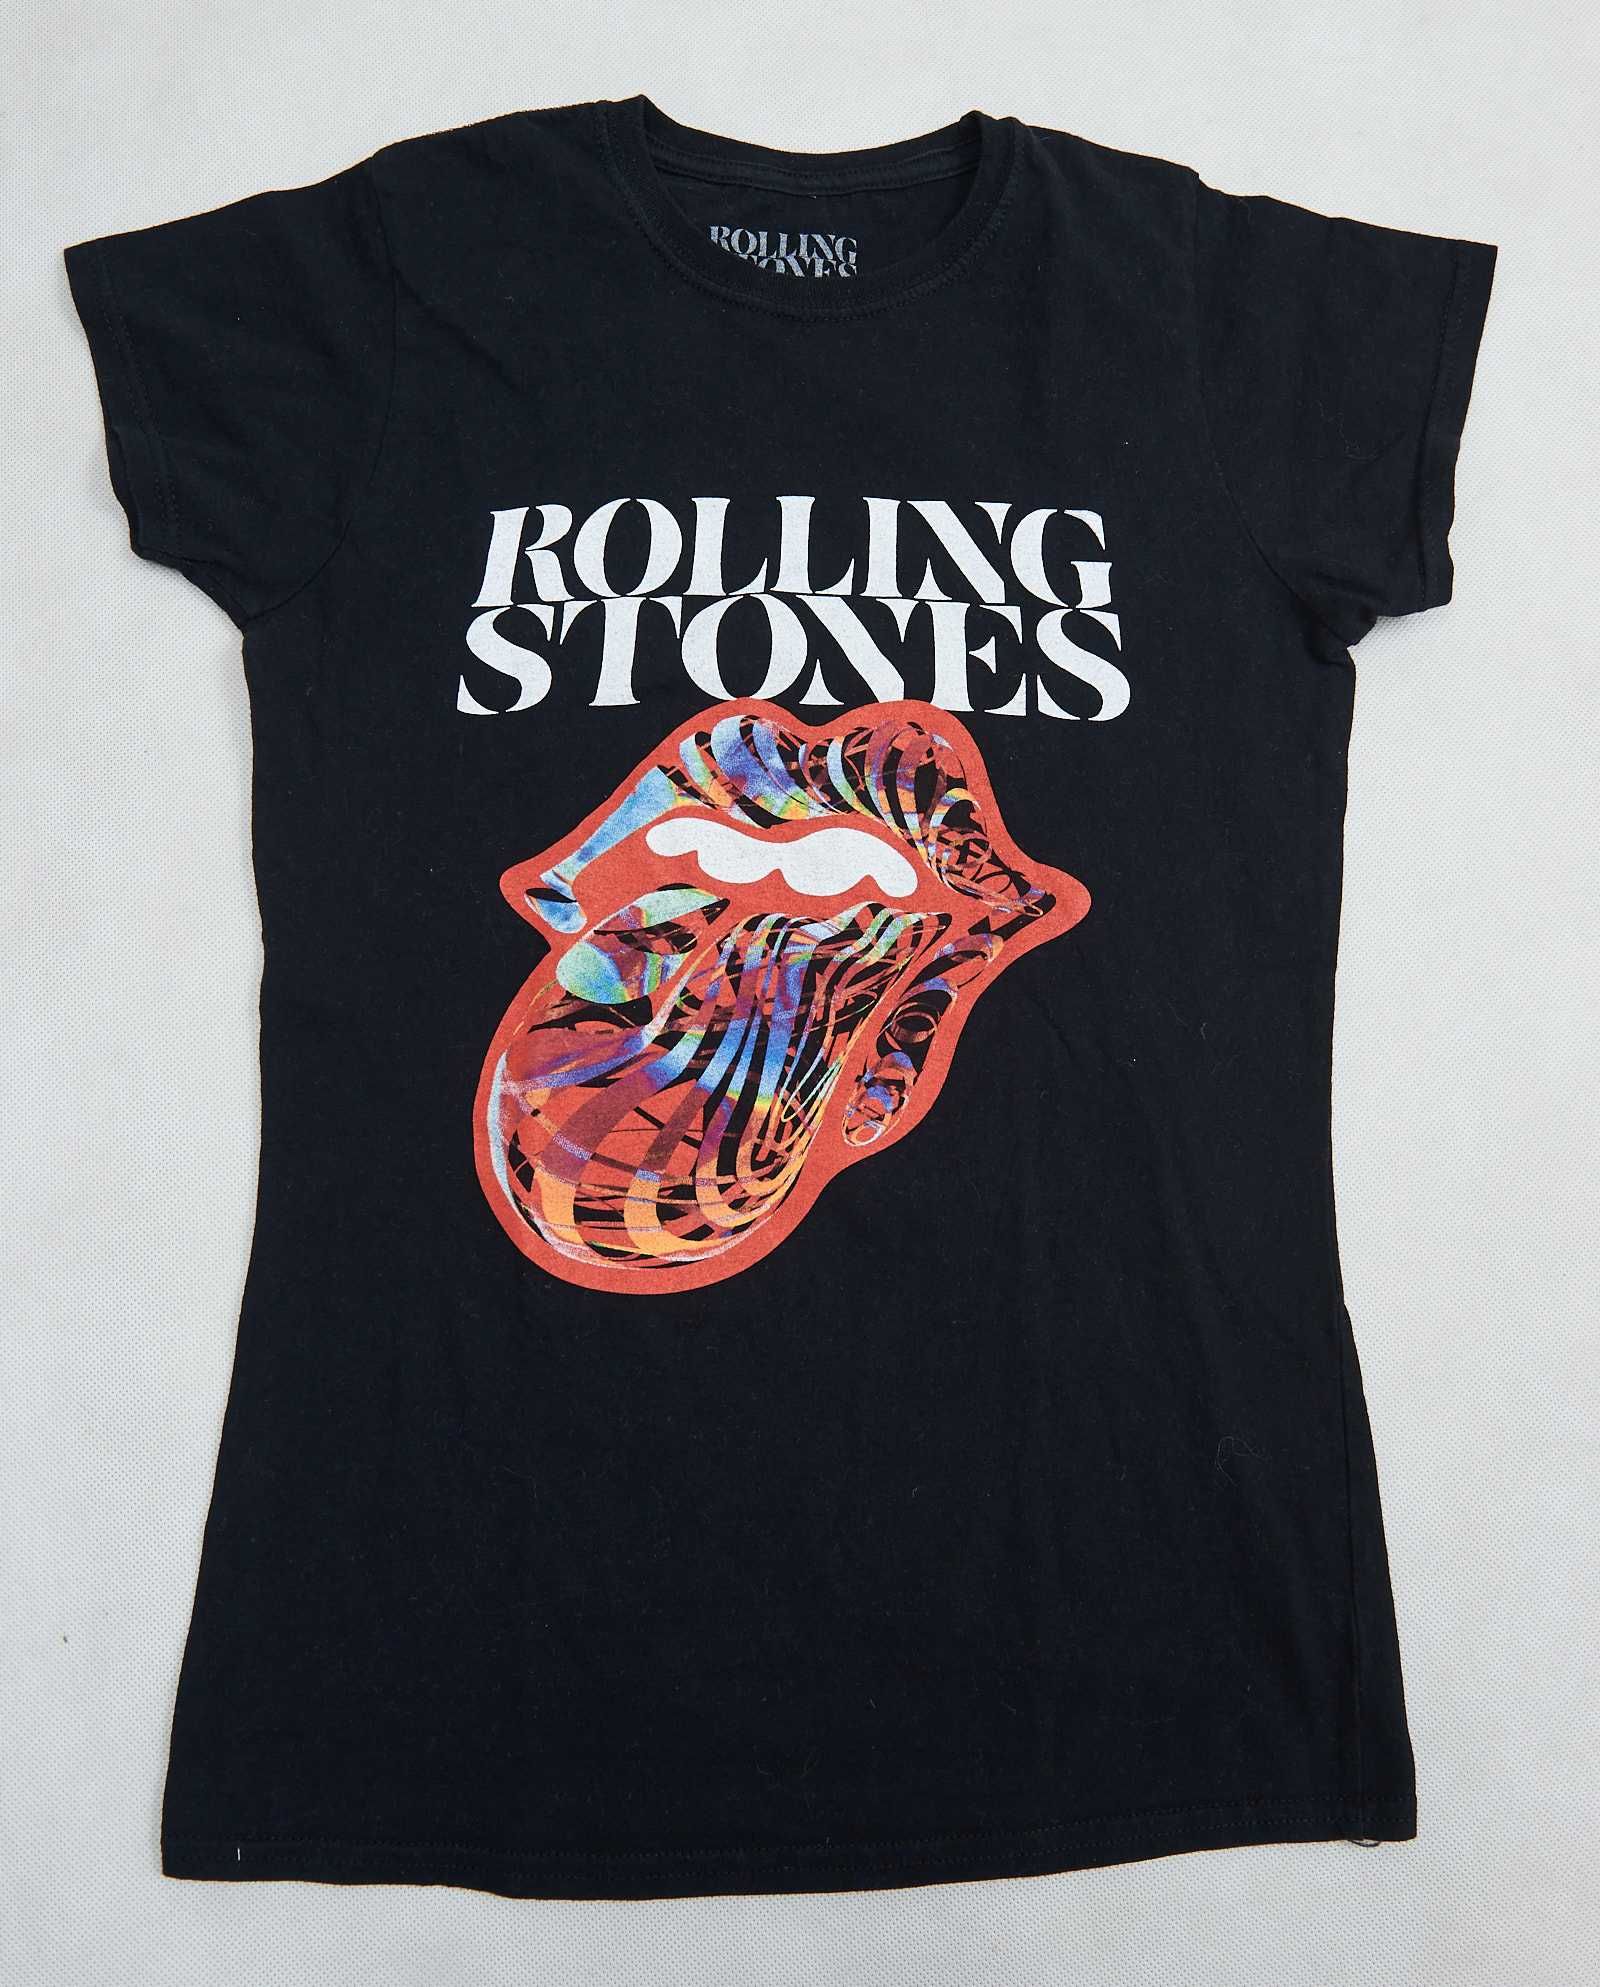 Rolling Stones Sixty Tour 2022 koszulka t-shirt size M